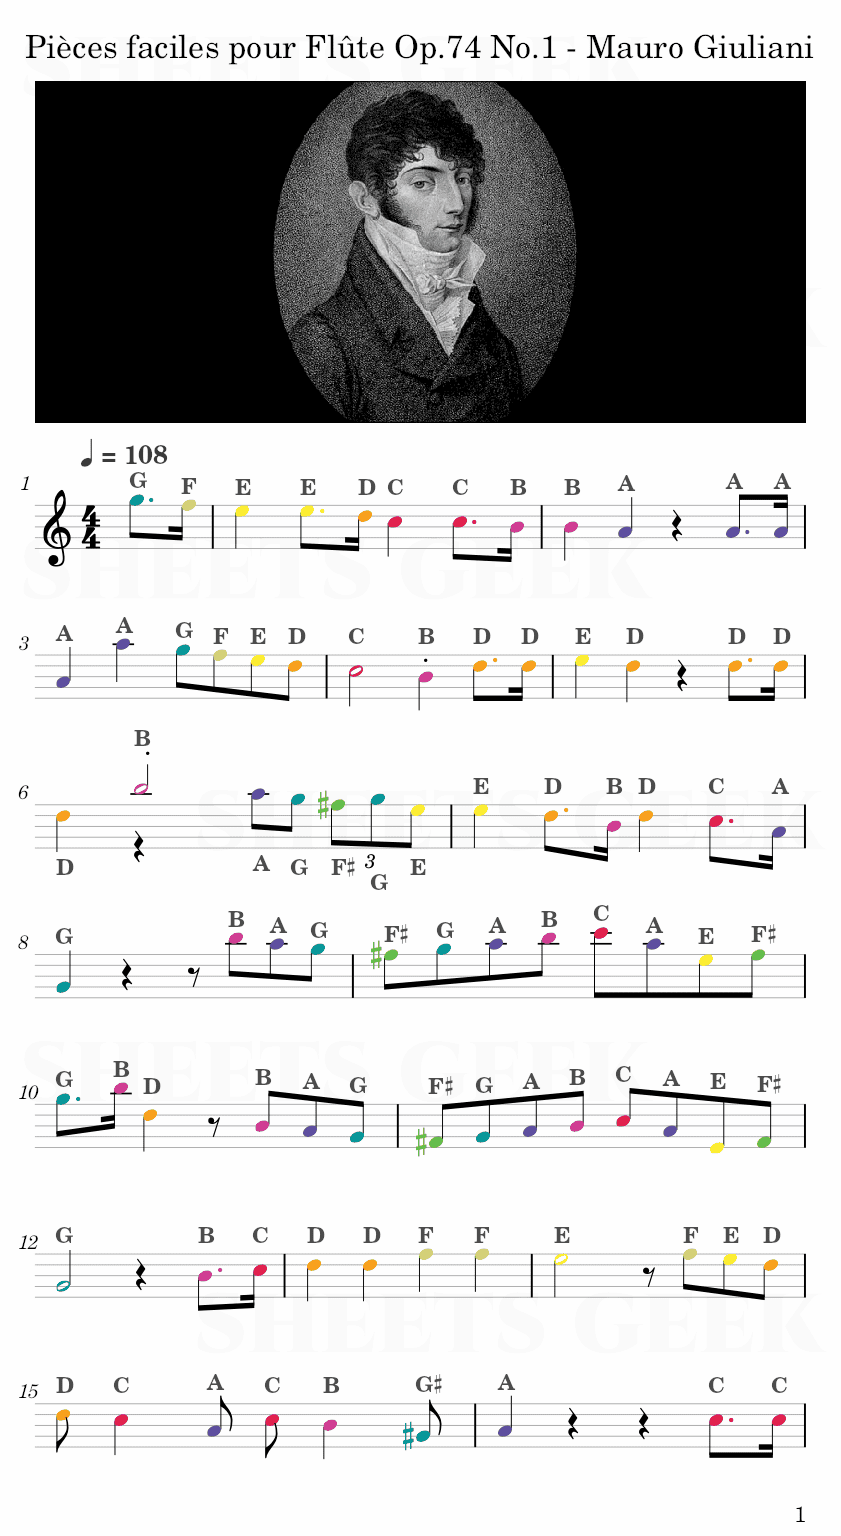 Pièces faciles pour Flûte ou Violon, Op.74 No.1 - Mauro Giuliani Easy Sheet Music Free for piano, keyboard, flute, violin, sax, cello page 1